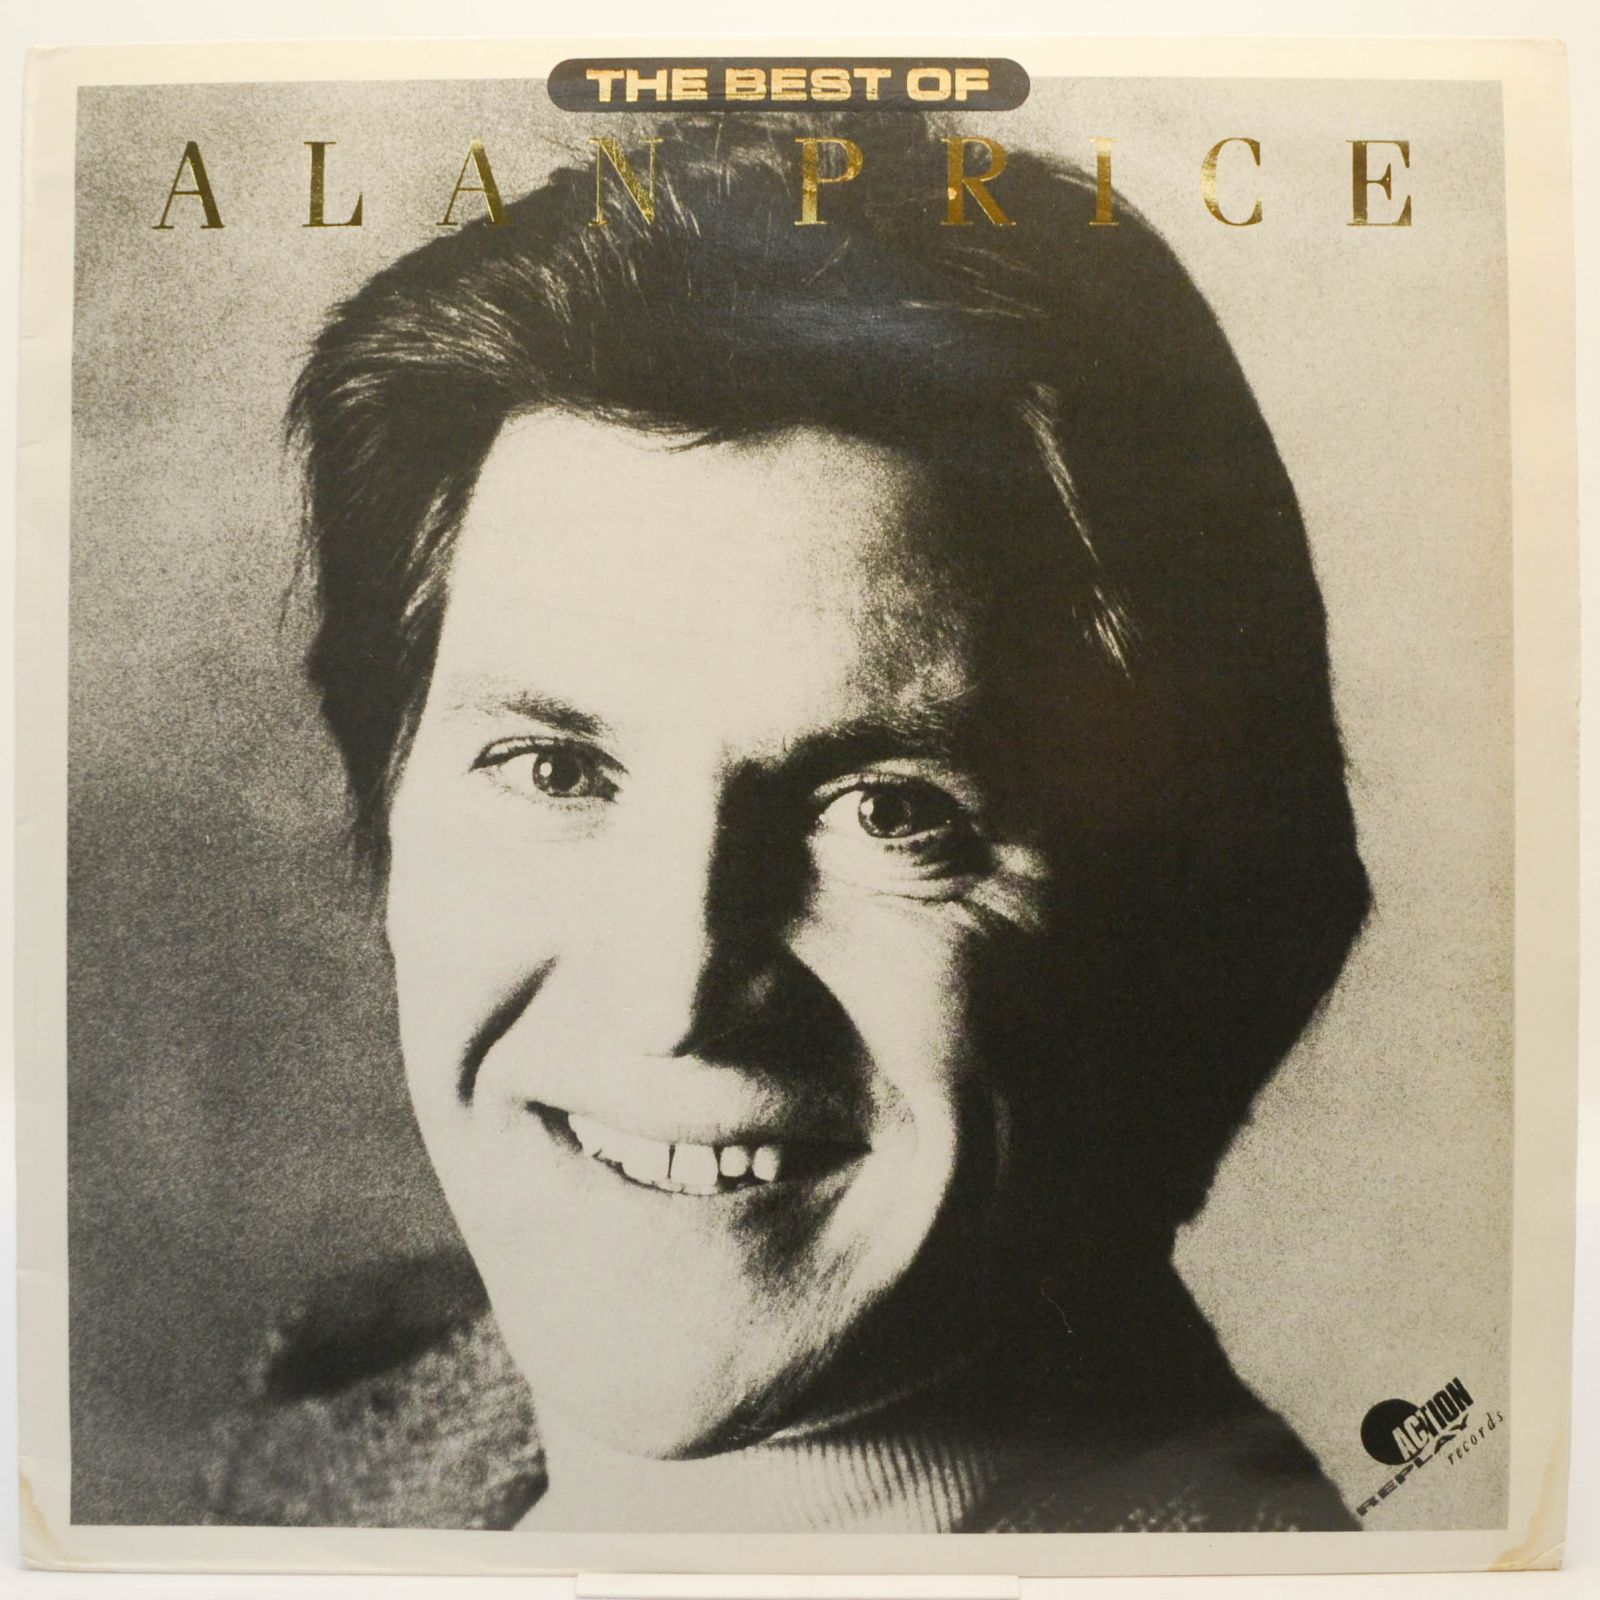 Alan Price — The Best Of Alan Price (UK), 1984